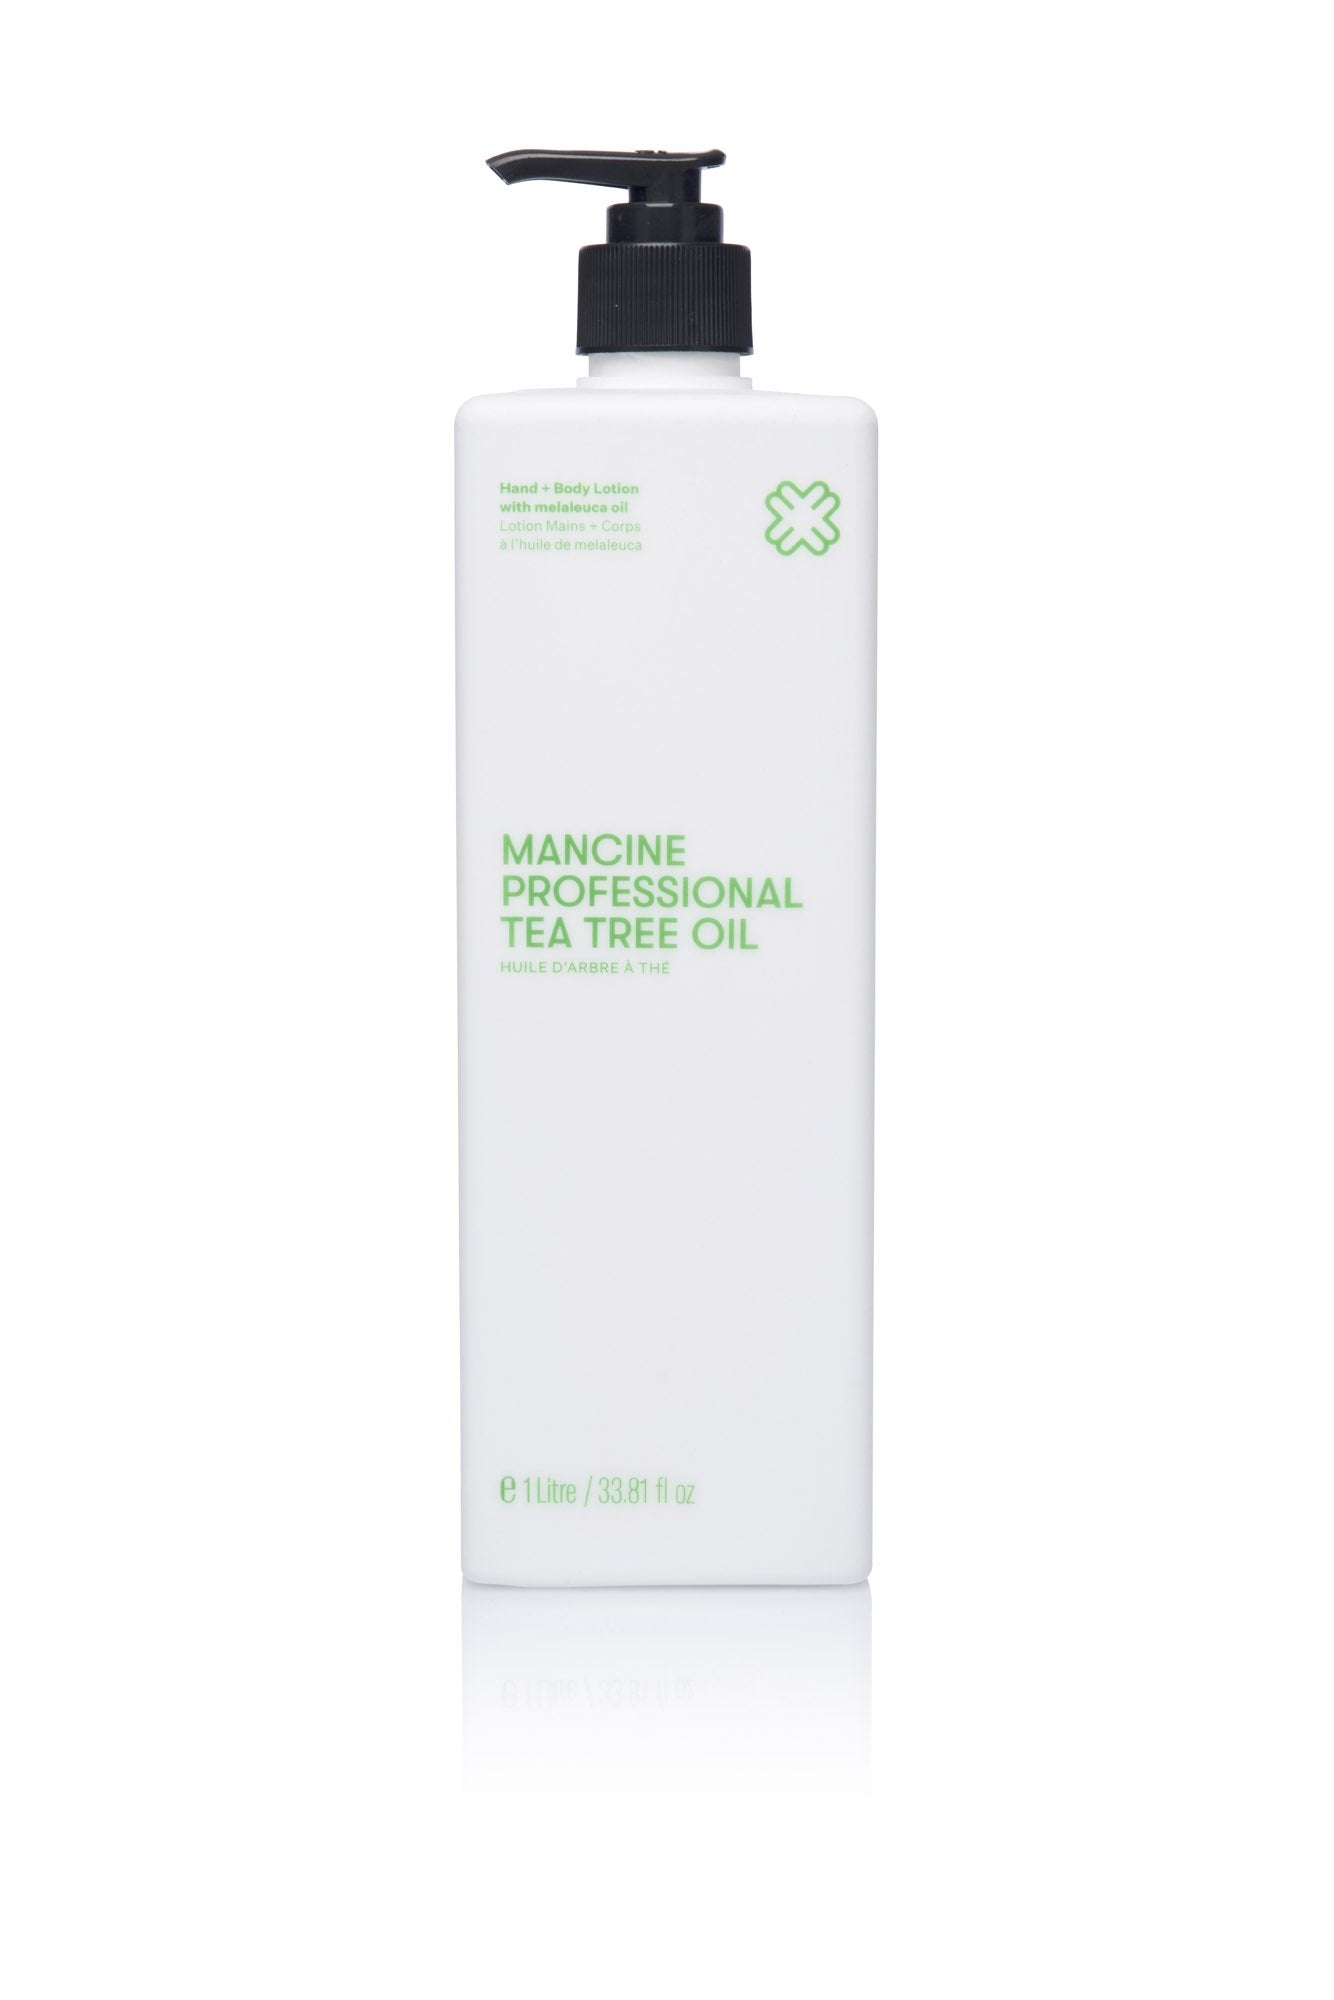 Mancine Tea Tree Hand & Body Lotion 5% TTO 1 litre